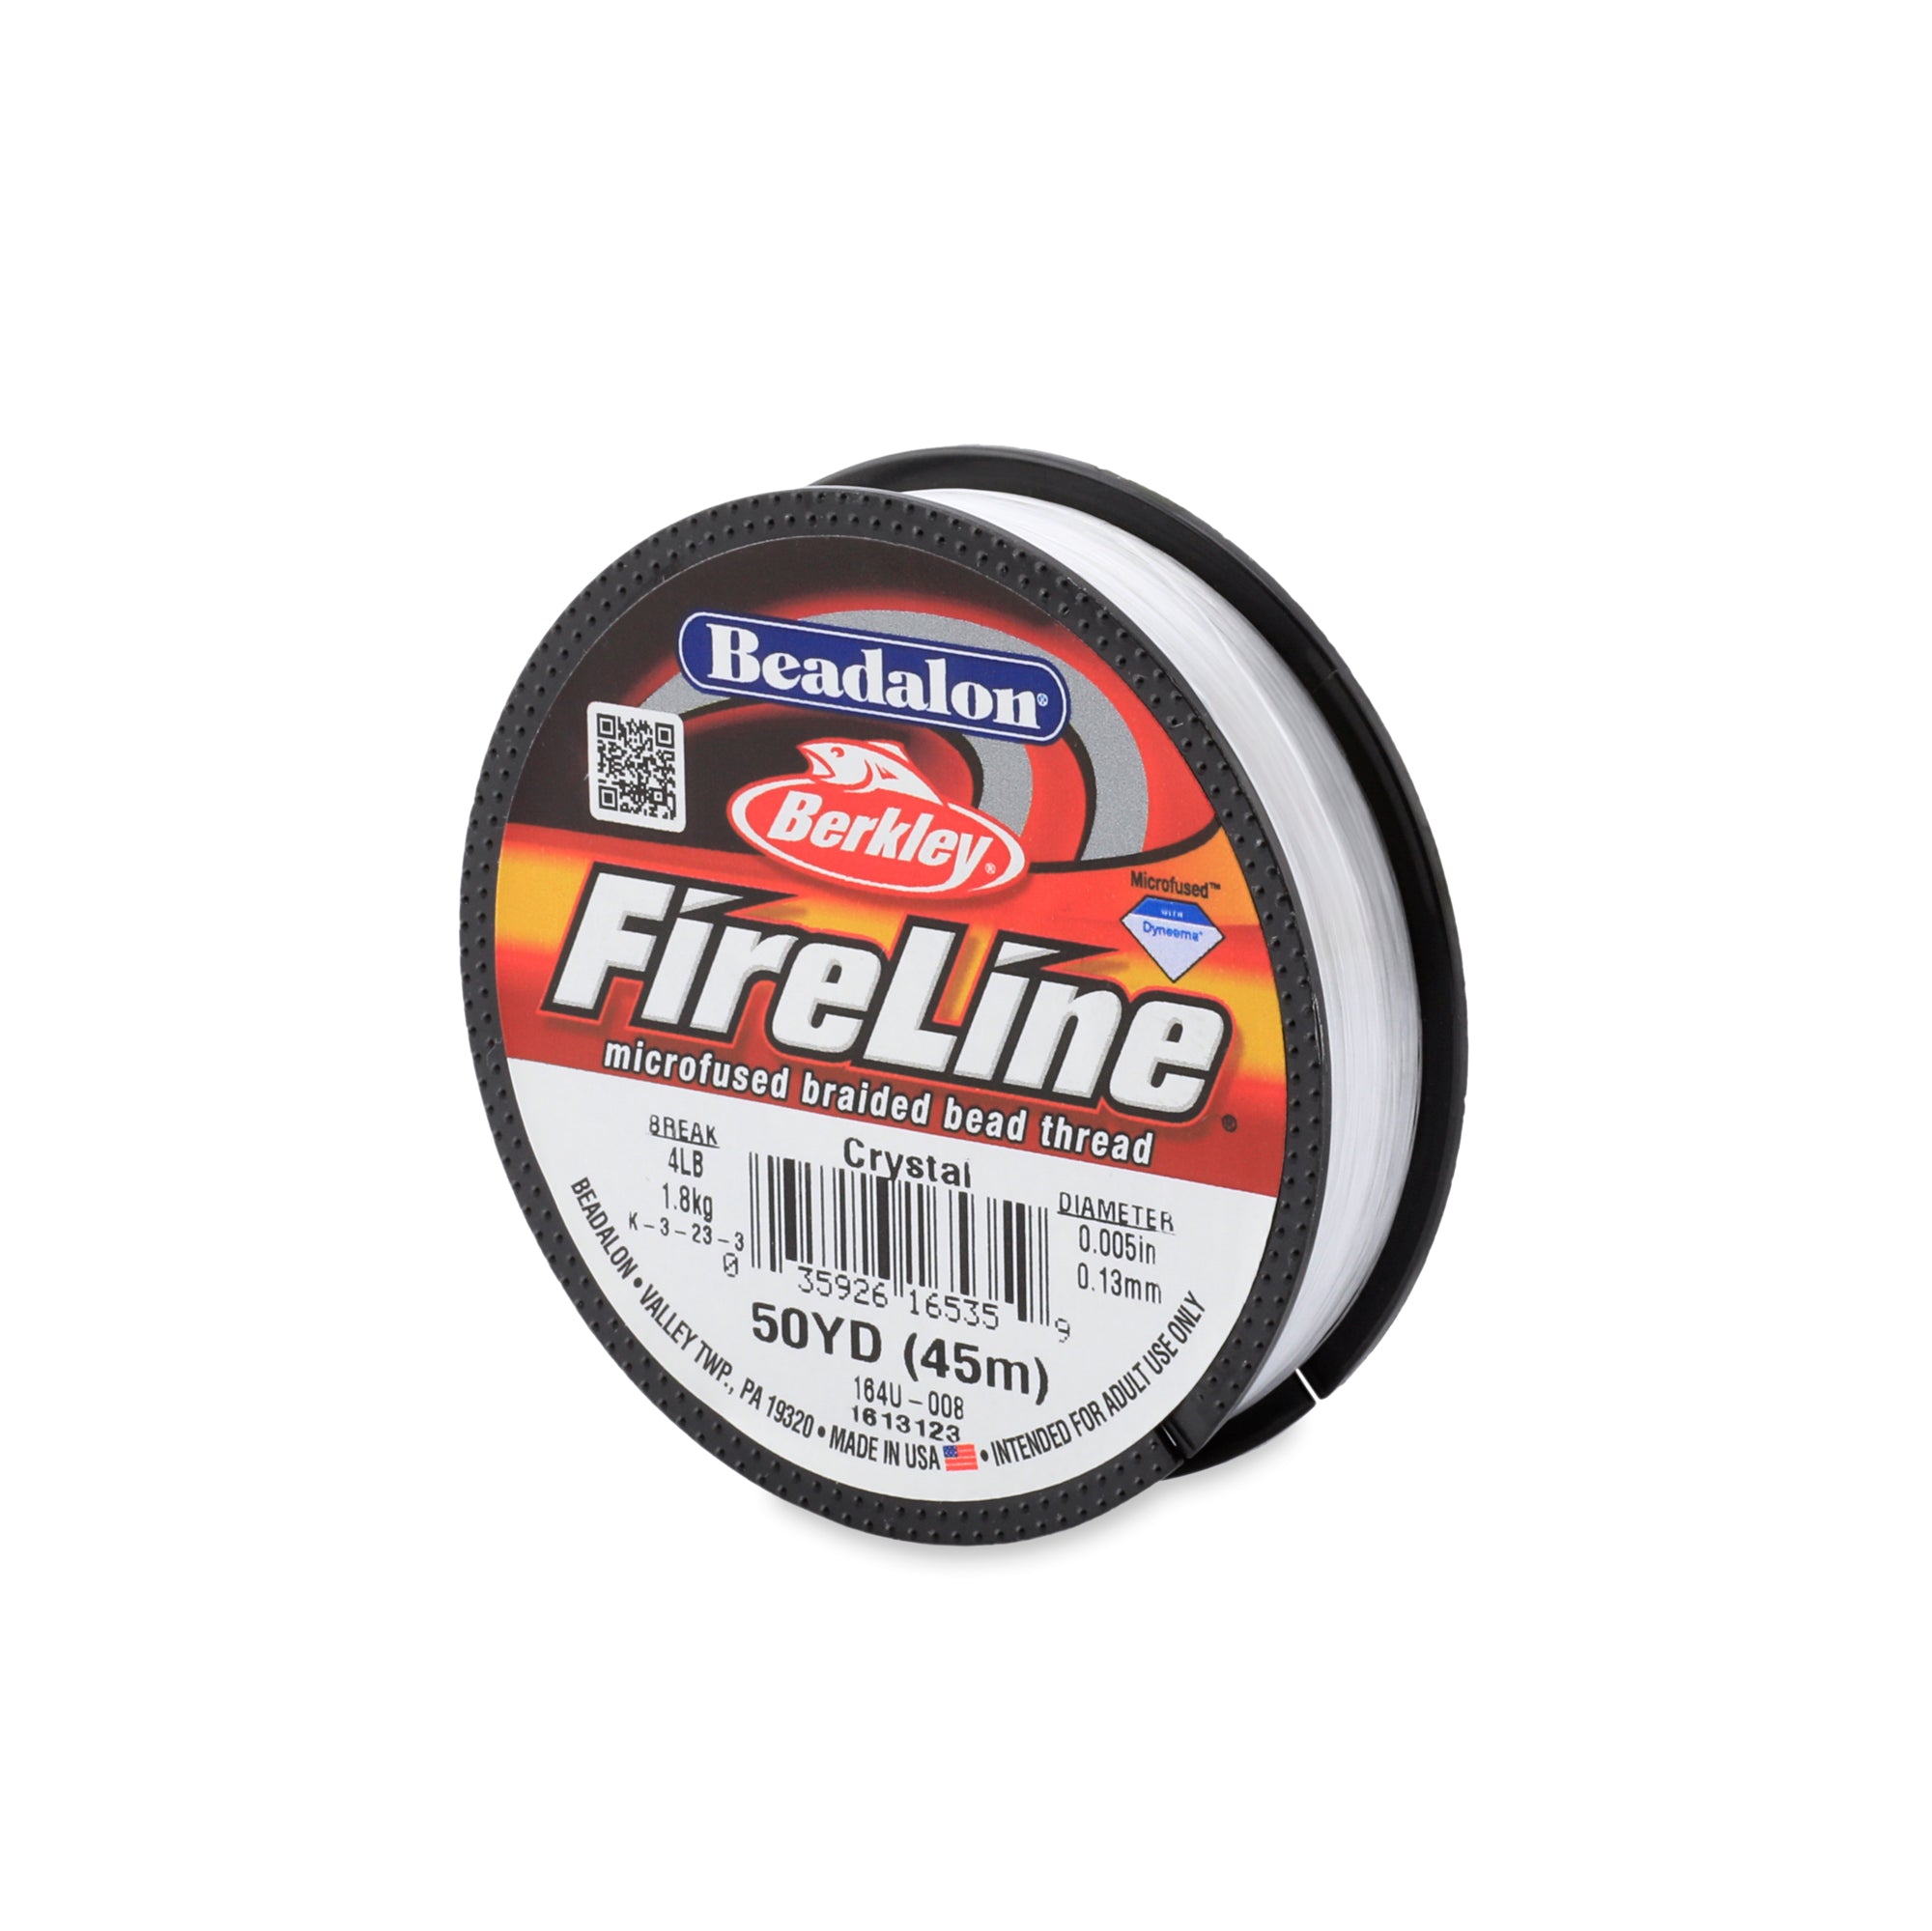 Fireline 4lb Crystal 50 yards